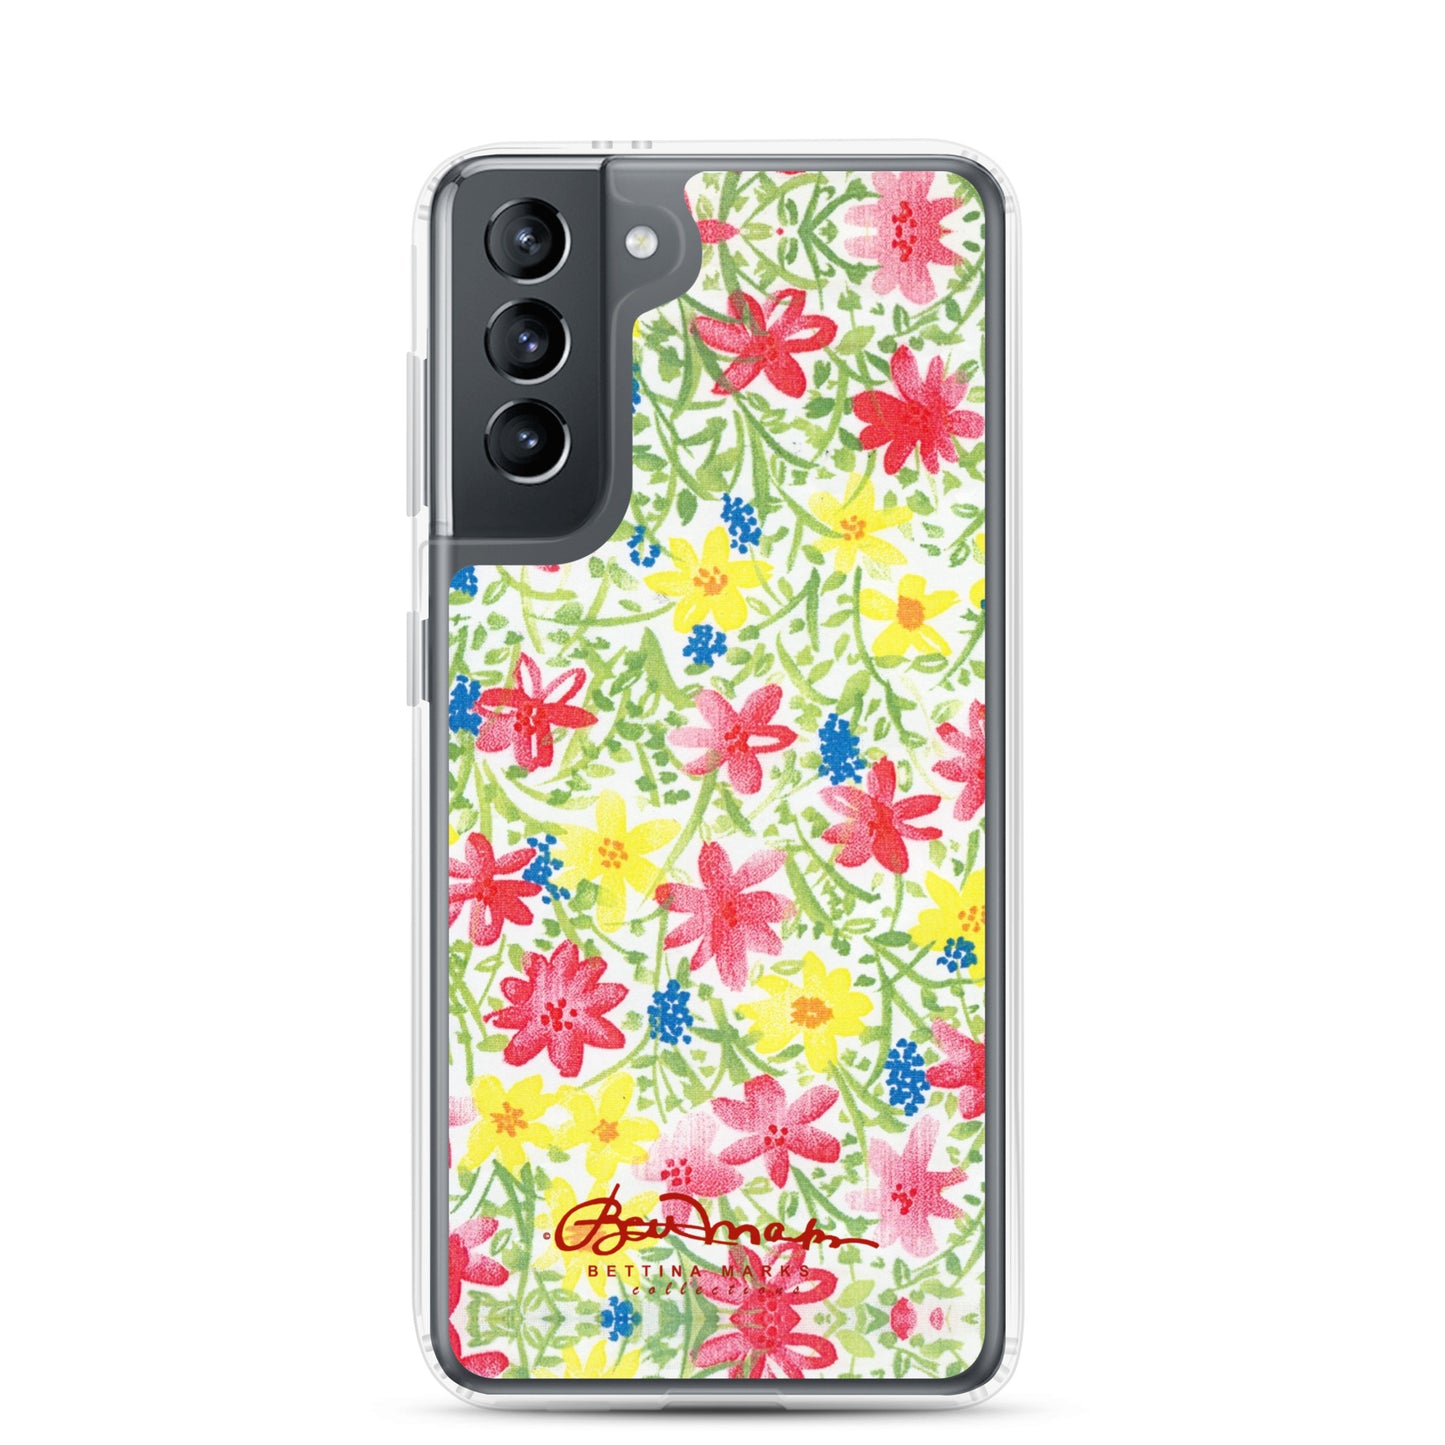 Wildflower Samsung Case (select model)